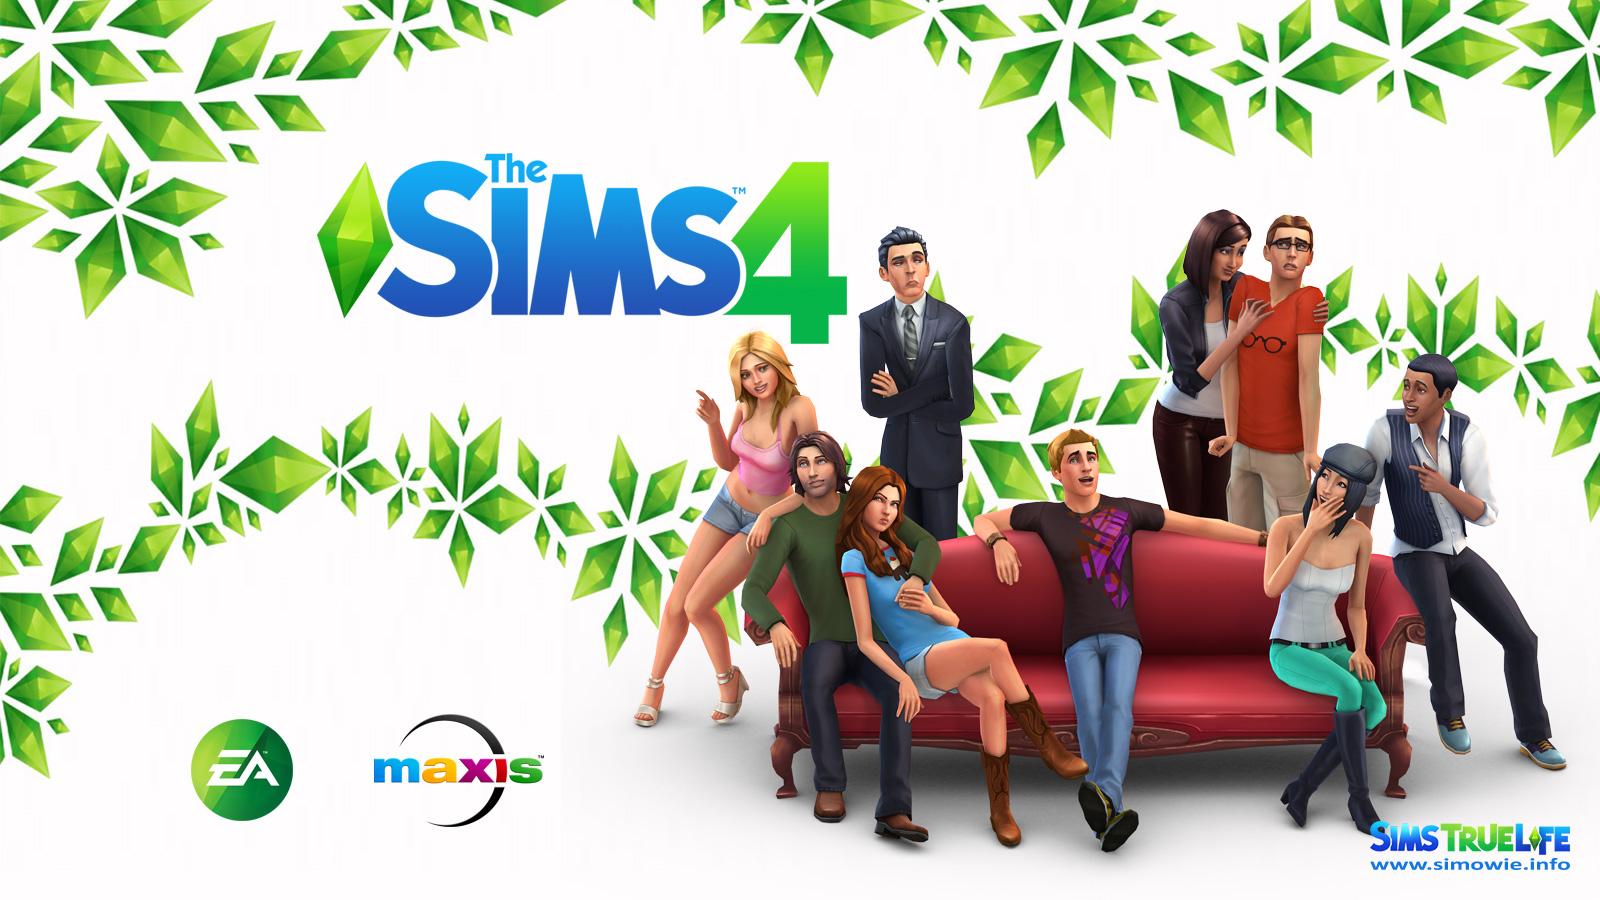 Sims 4 Wallpaper Downloads